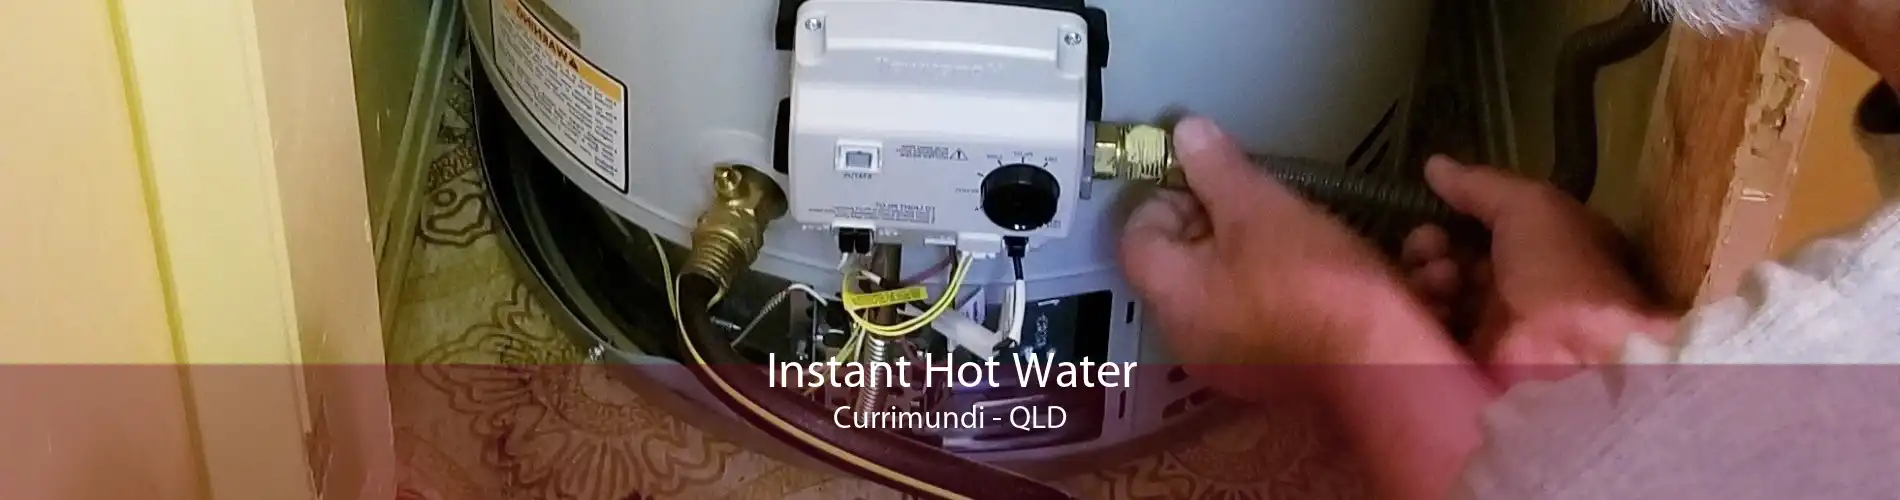 Instant Hot Water Currimundi - QLD